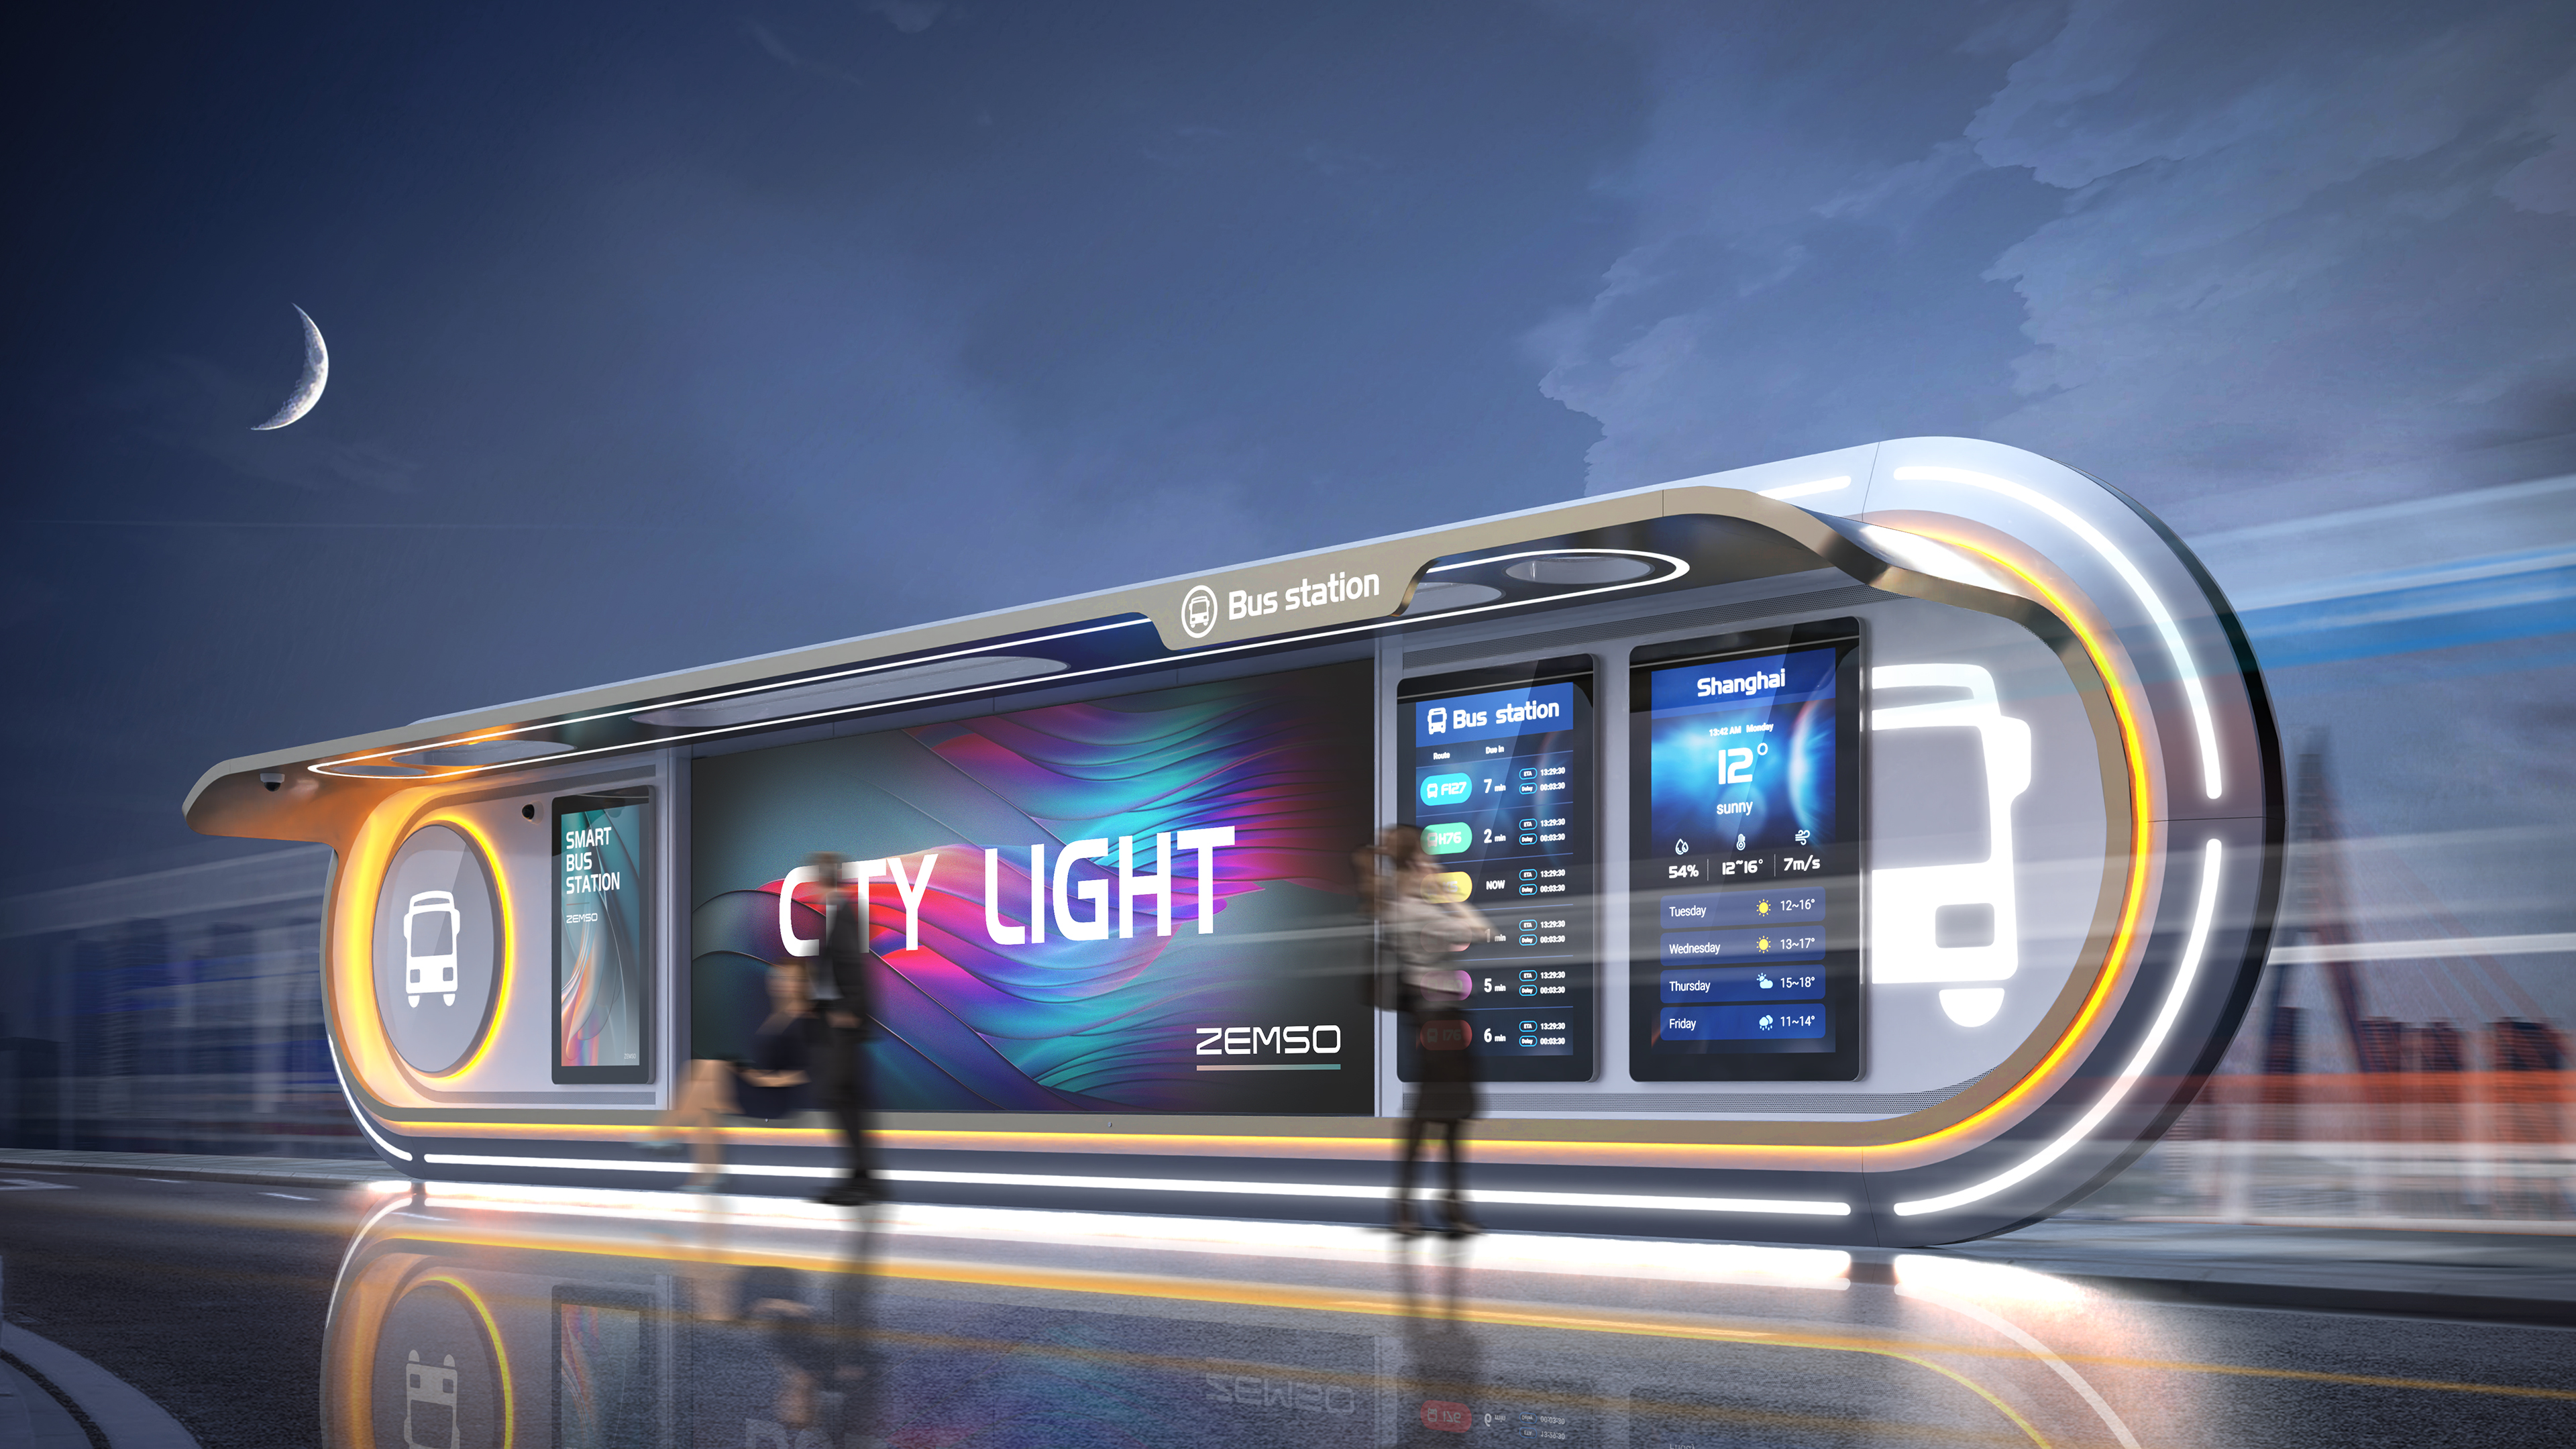 City Glory Smart Bus Station